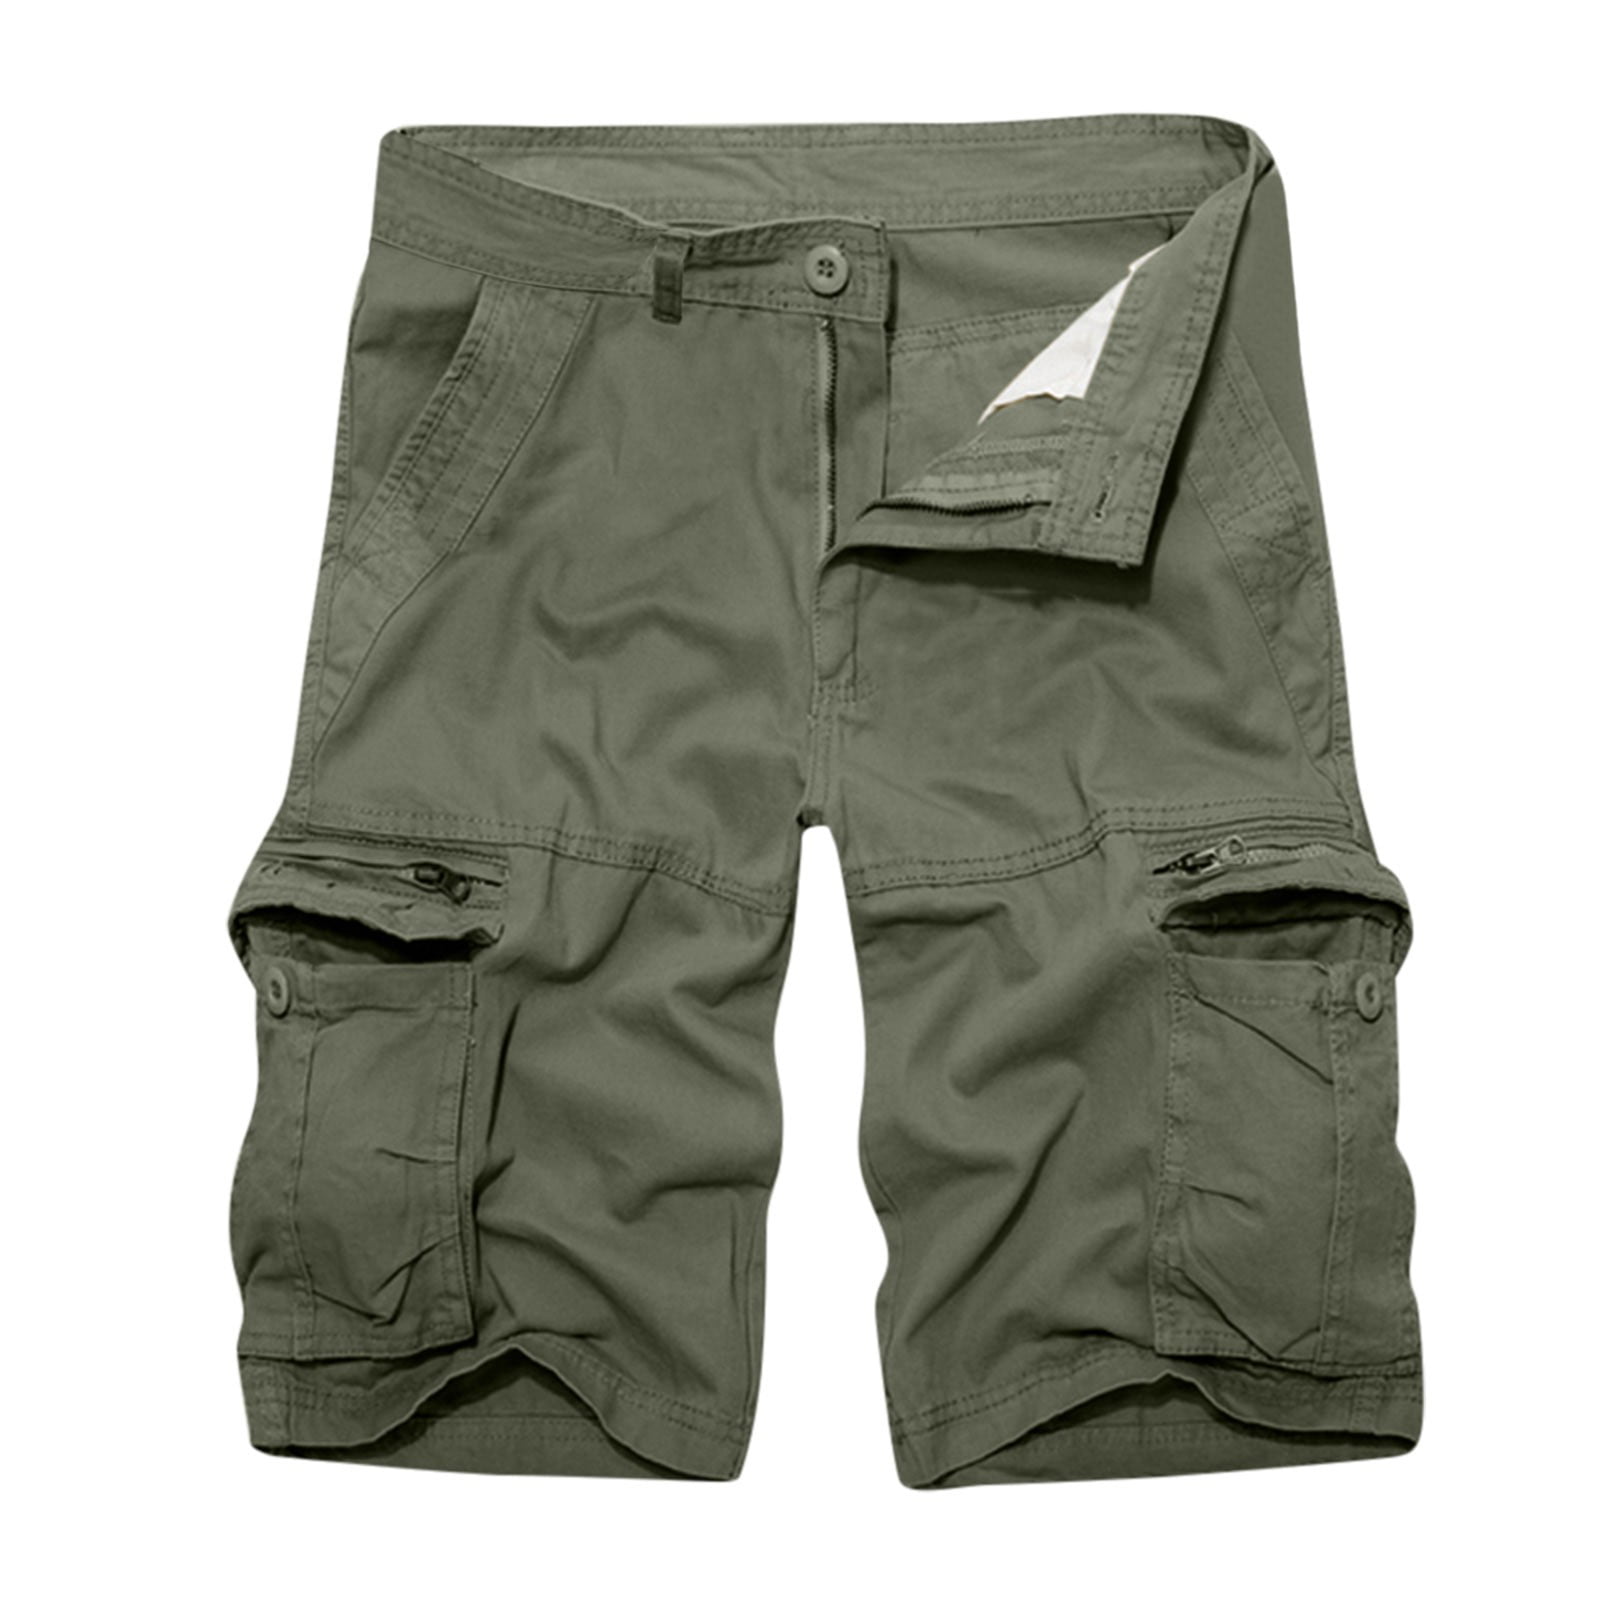 BSDHBS Cargo Pants Men's Vintage Cargo Cotton Shorts Summer Sports Leisure  Jogging Shorts Green Size 31 